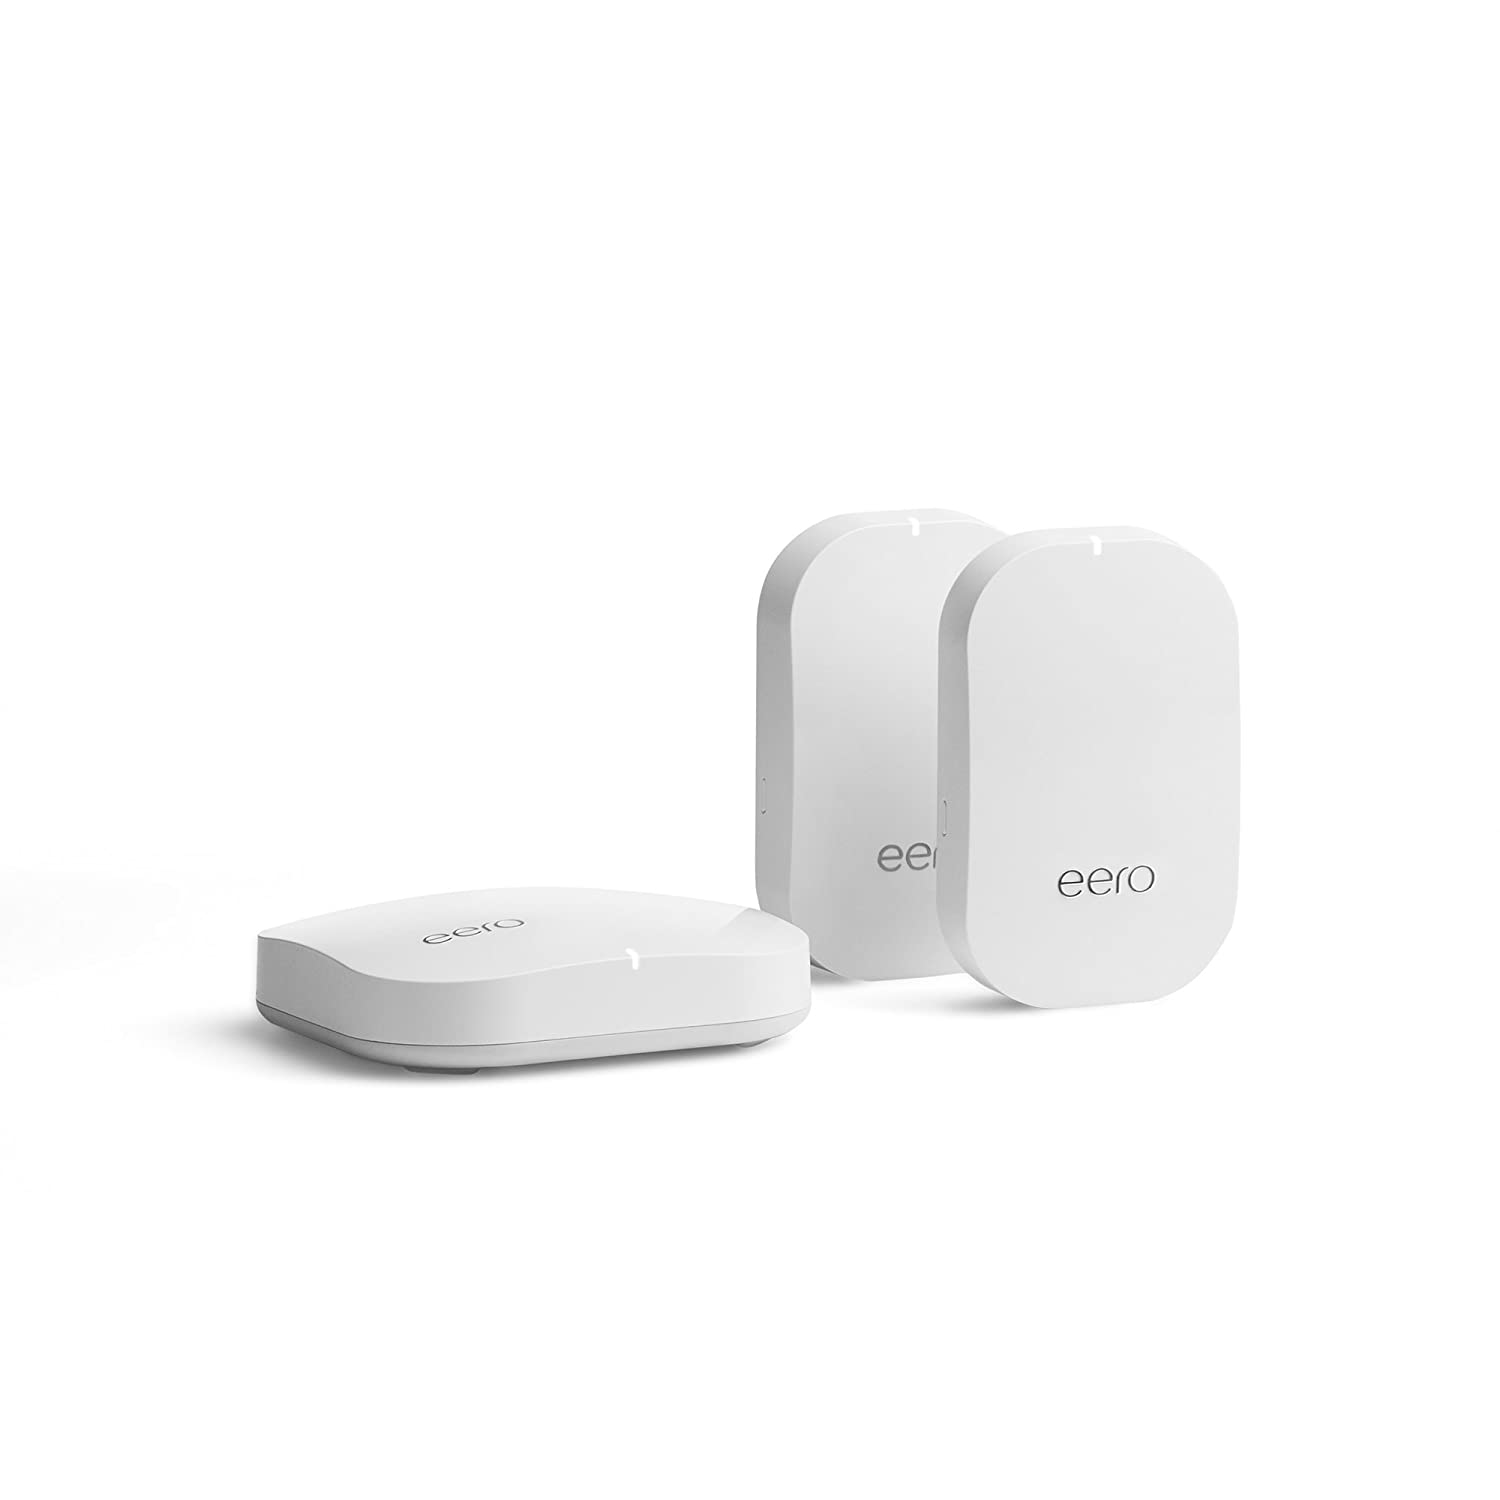 Eero Mesh Wi-Fi System 2nd Generation, 1 Eero + 2 Eero Beacons - White (Certified Refurbished)